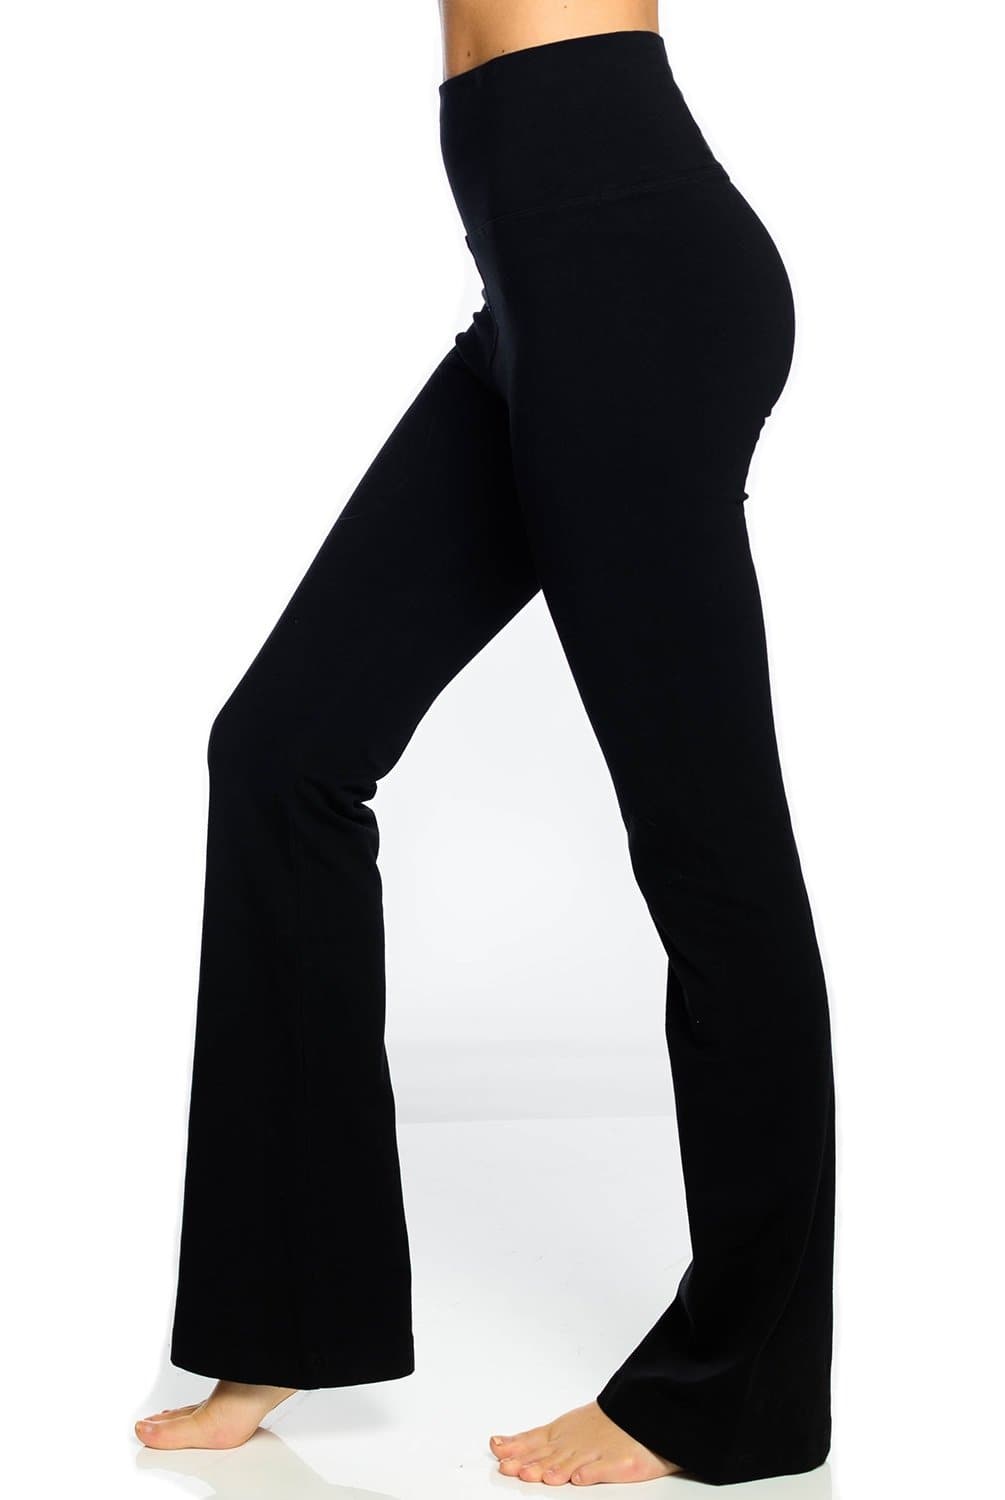 HardTail Rolldown Bootleg Pant - Black  Flare pants, Bootleg pants,  Comfortable yoga pants